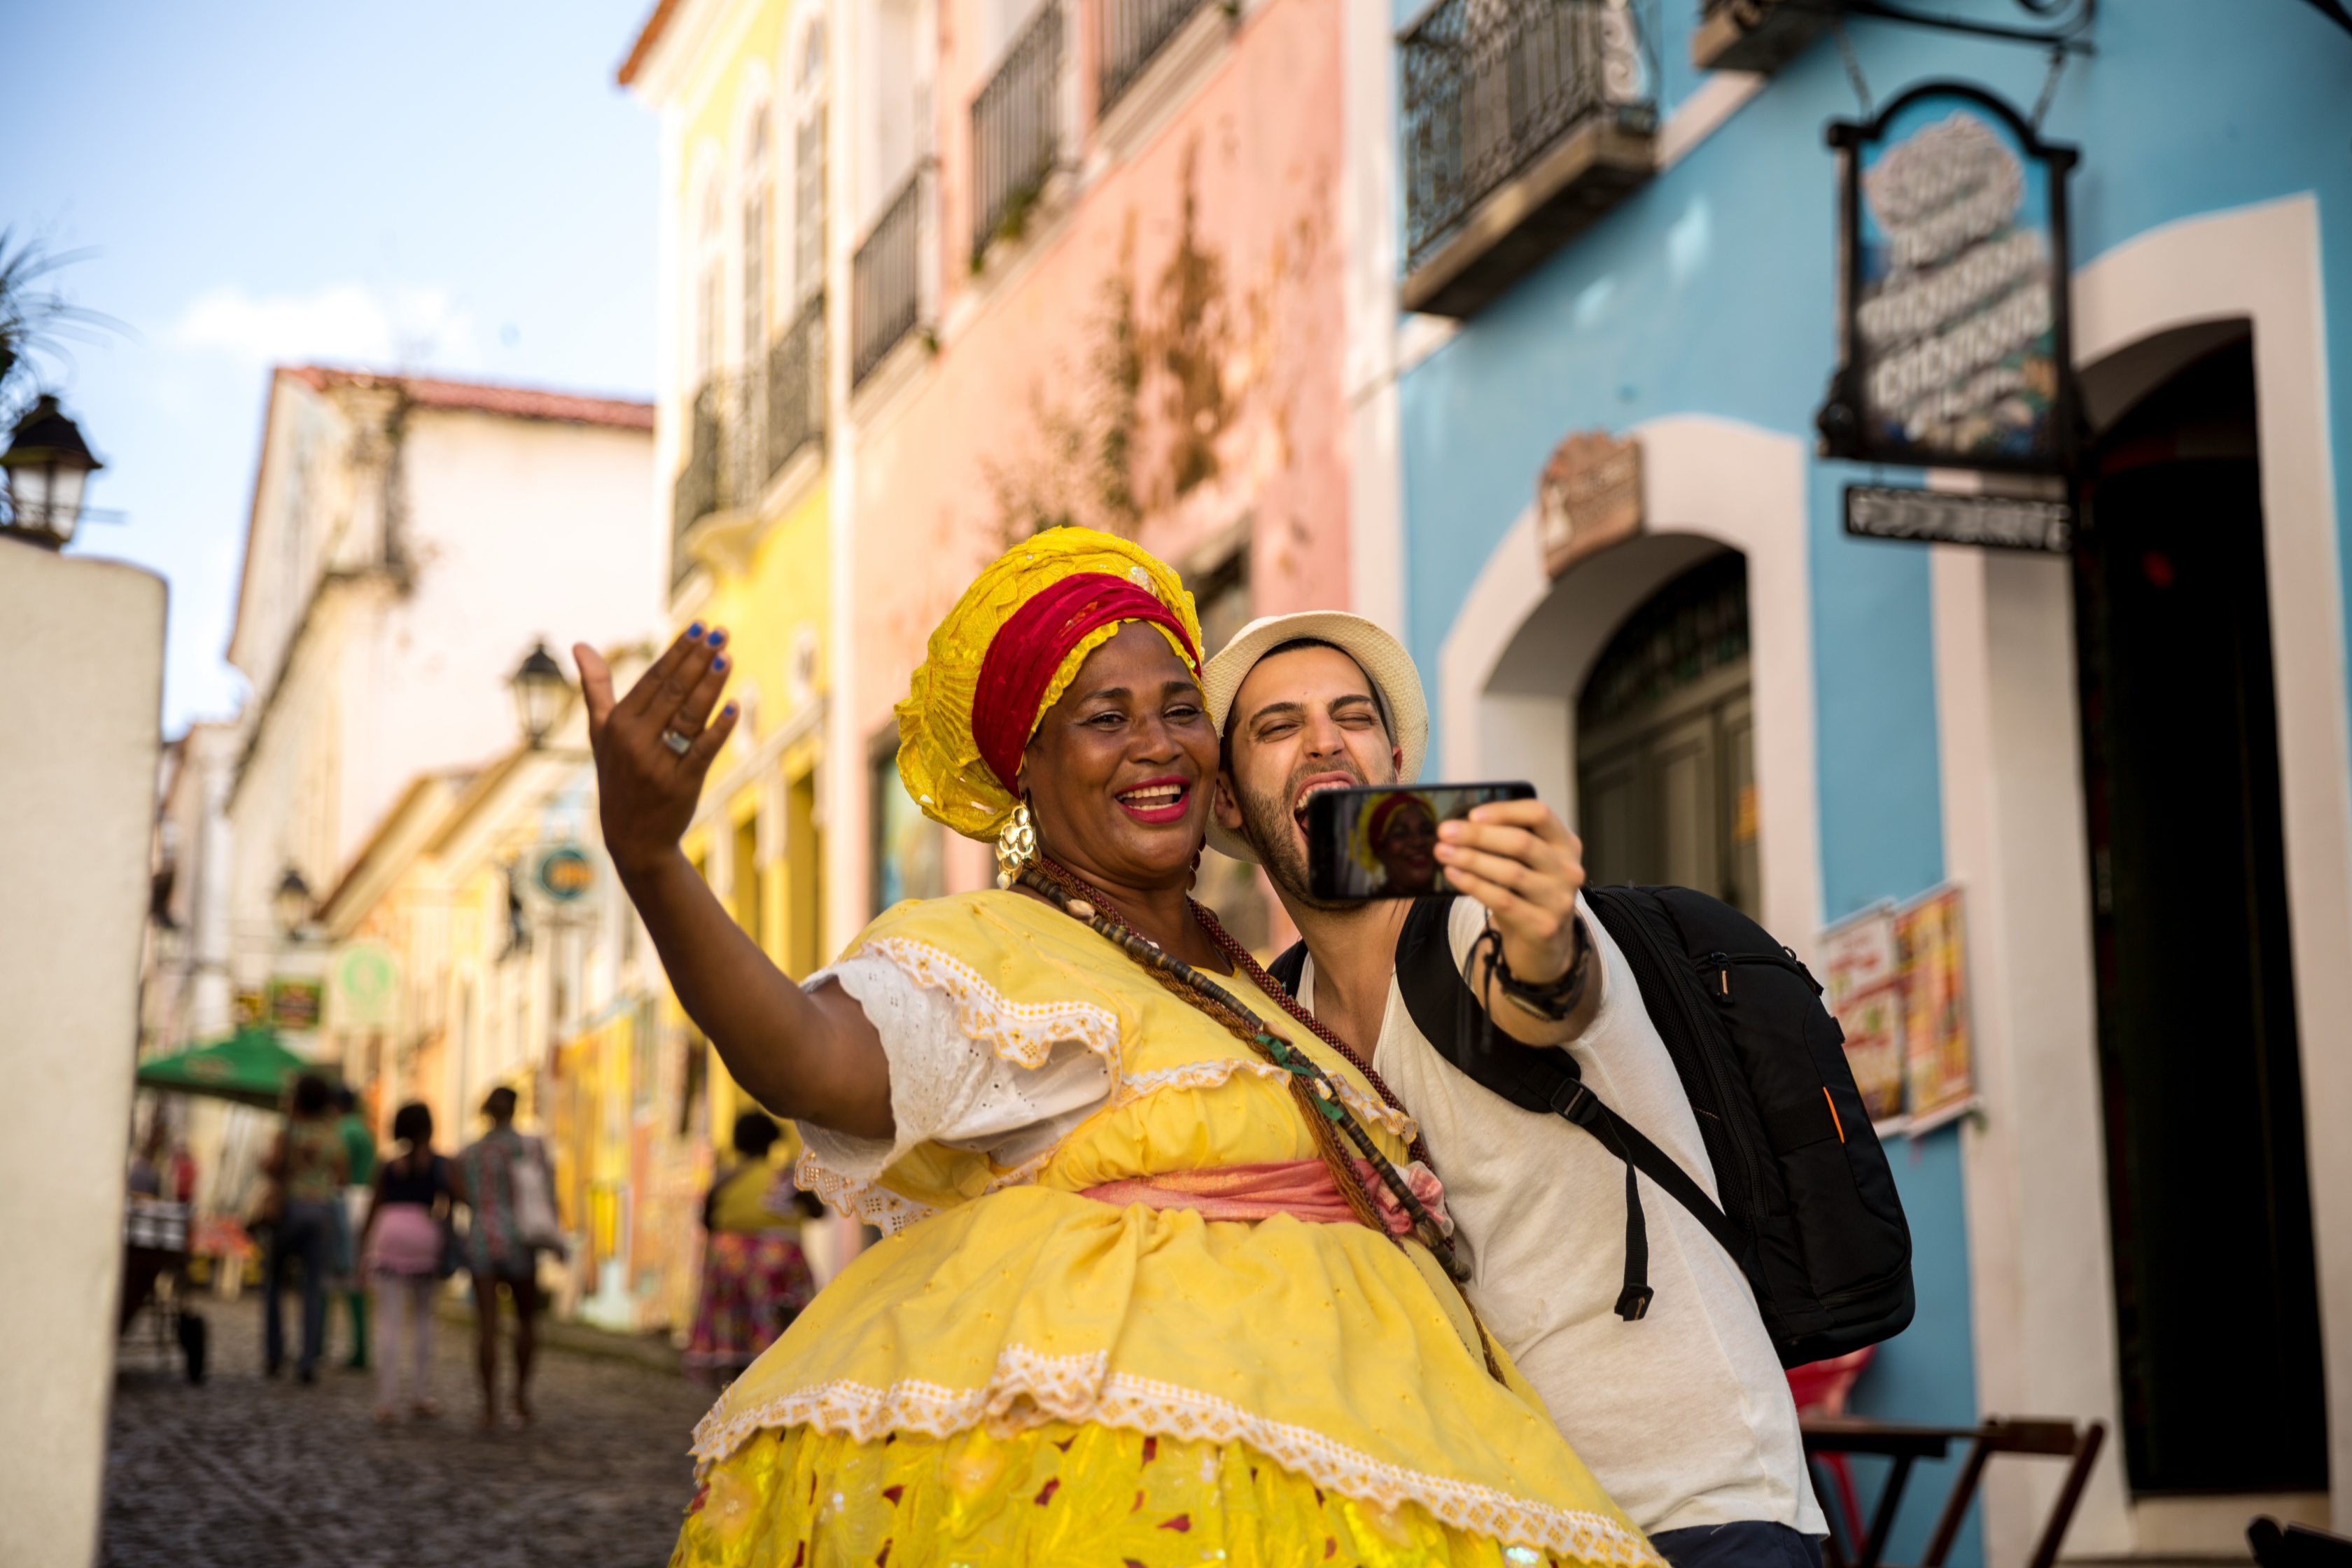 A tourist takes photo with a Cuban woman